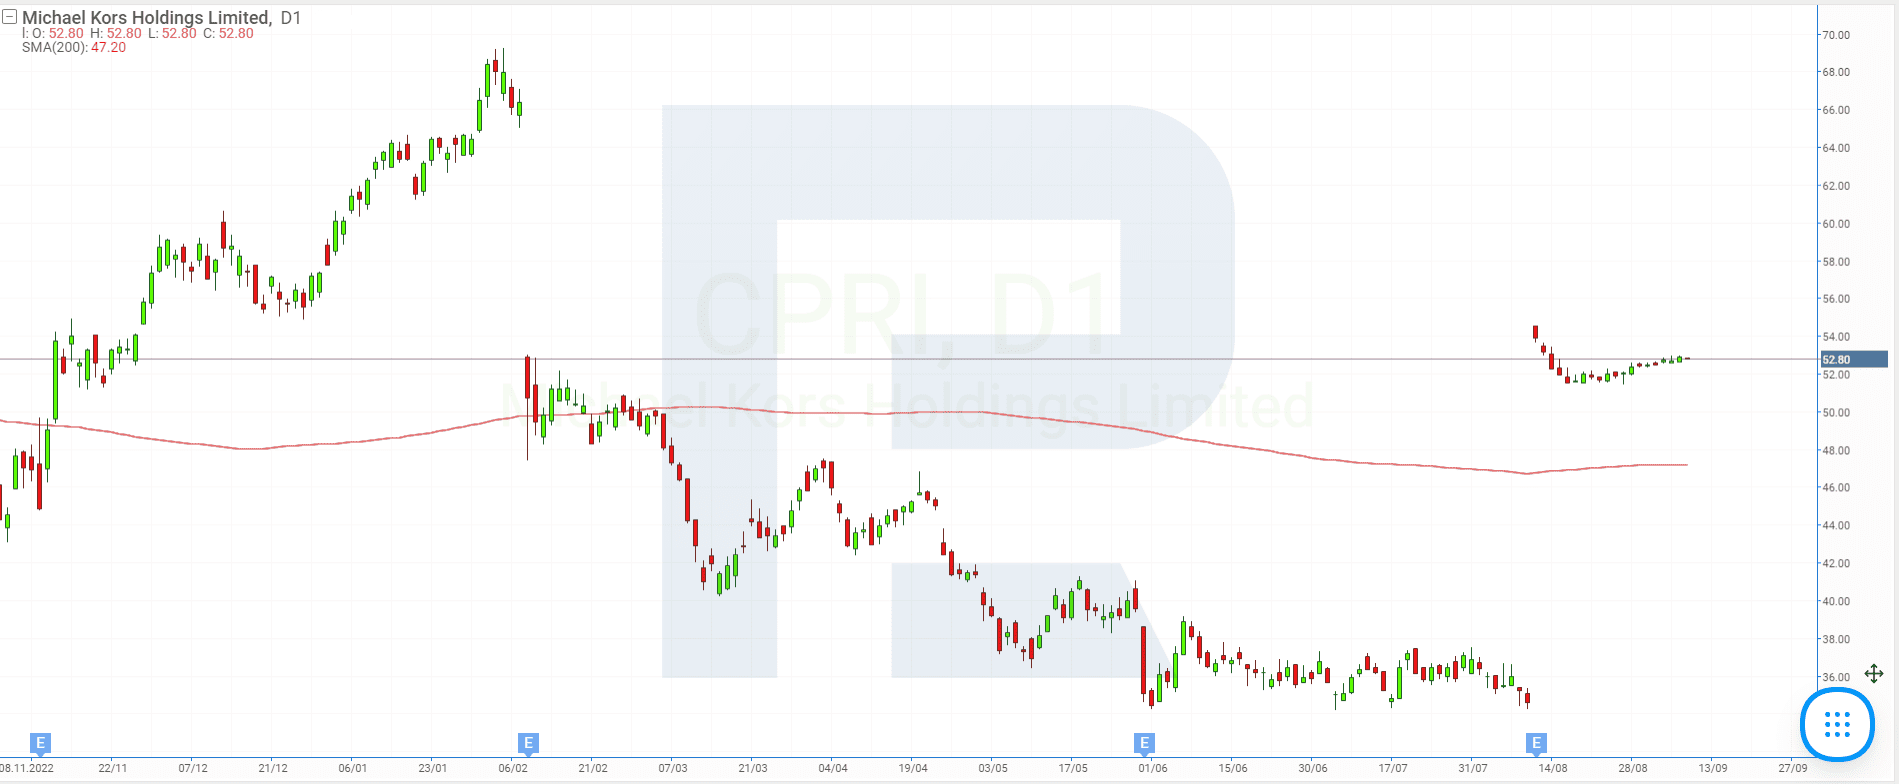 Capri Holdings Ltd